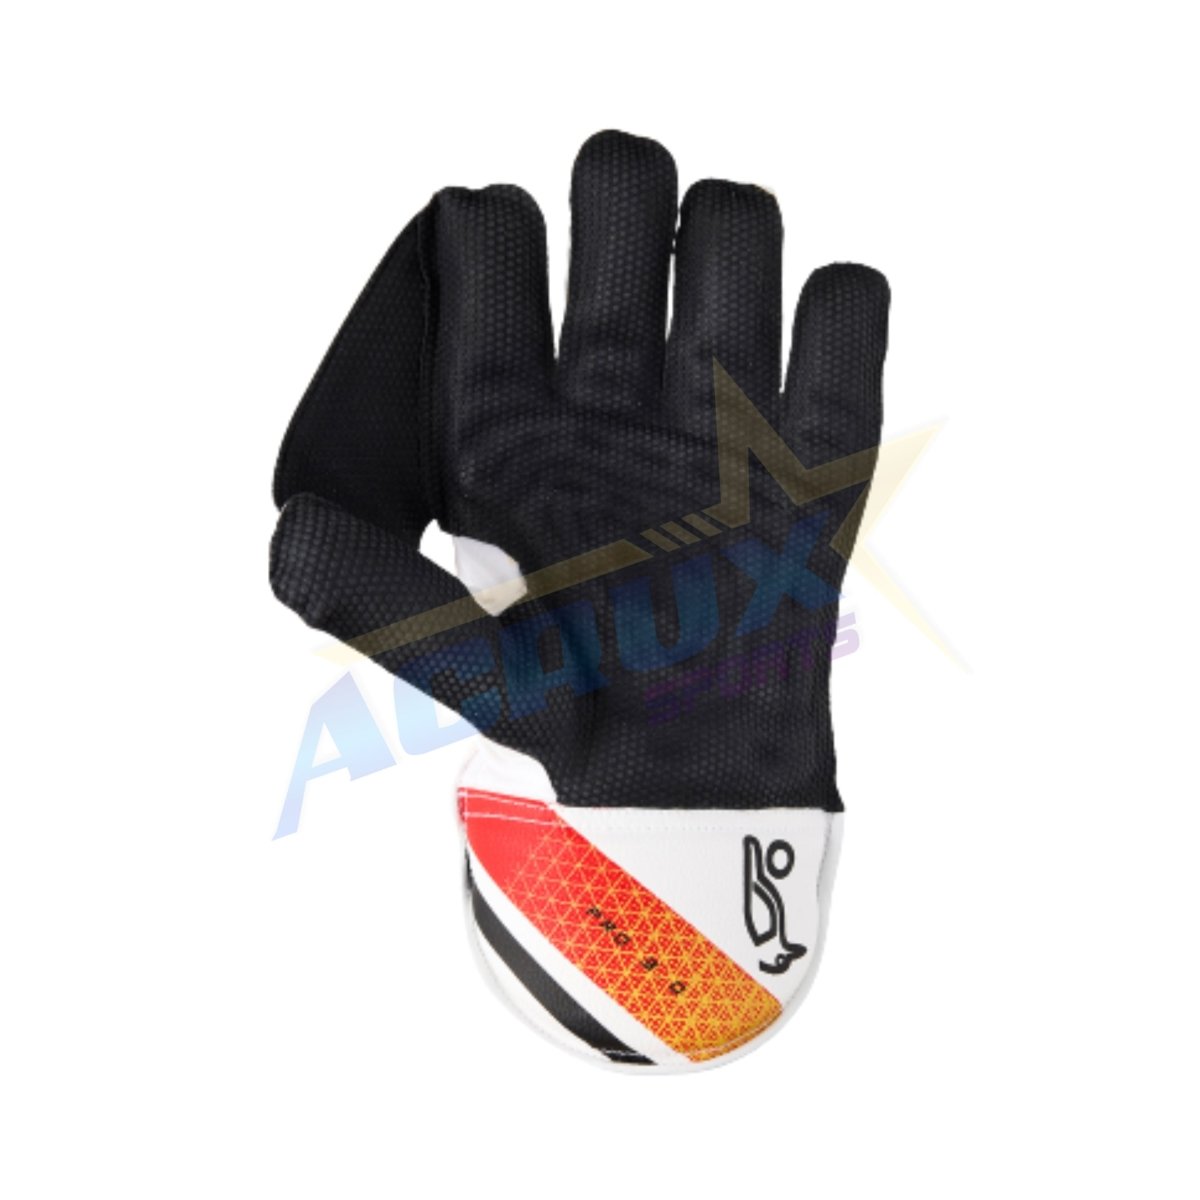 Kookaburra Beast Pro 3.0 Cricket Wicket Keeping Gloves Youth - Acrux Sports